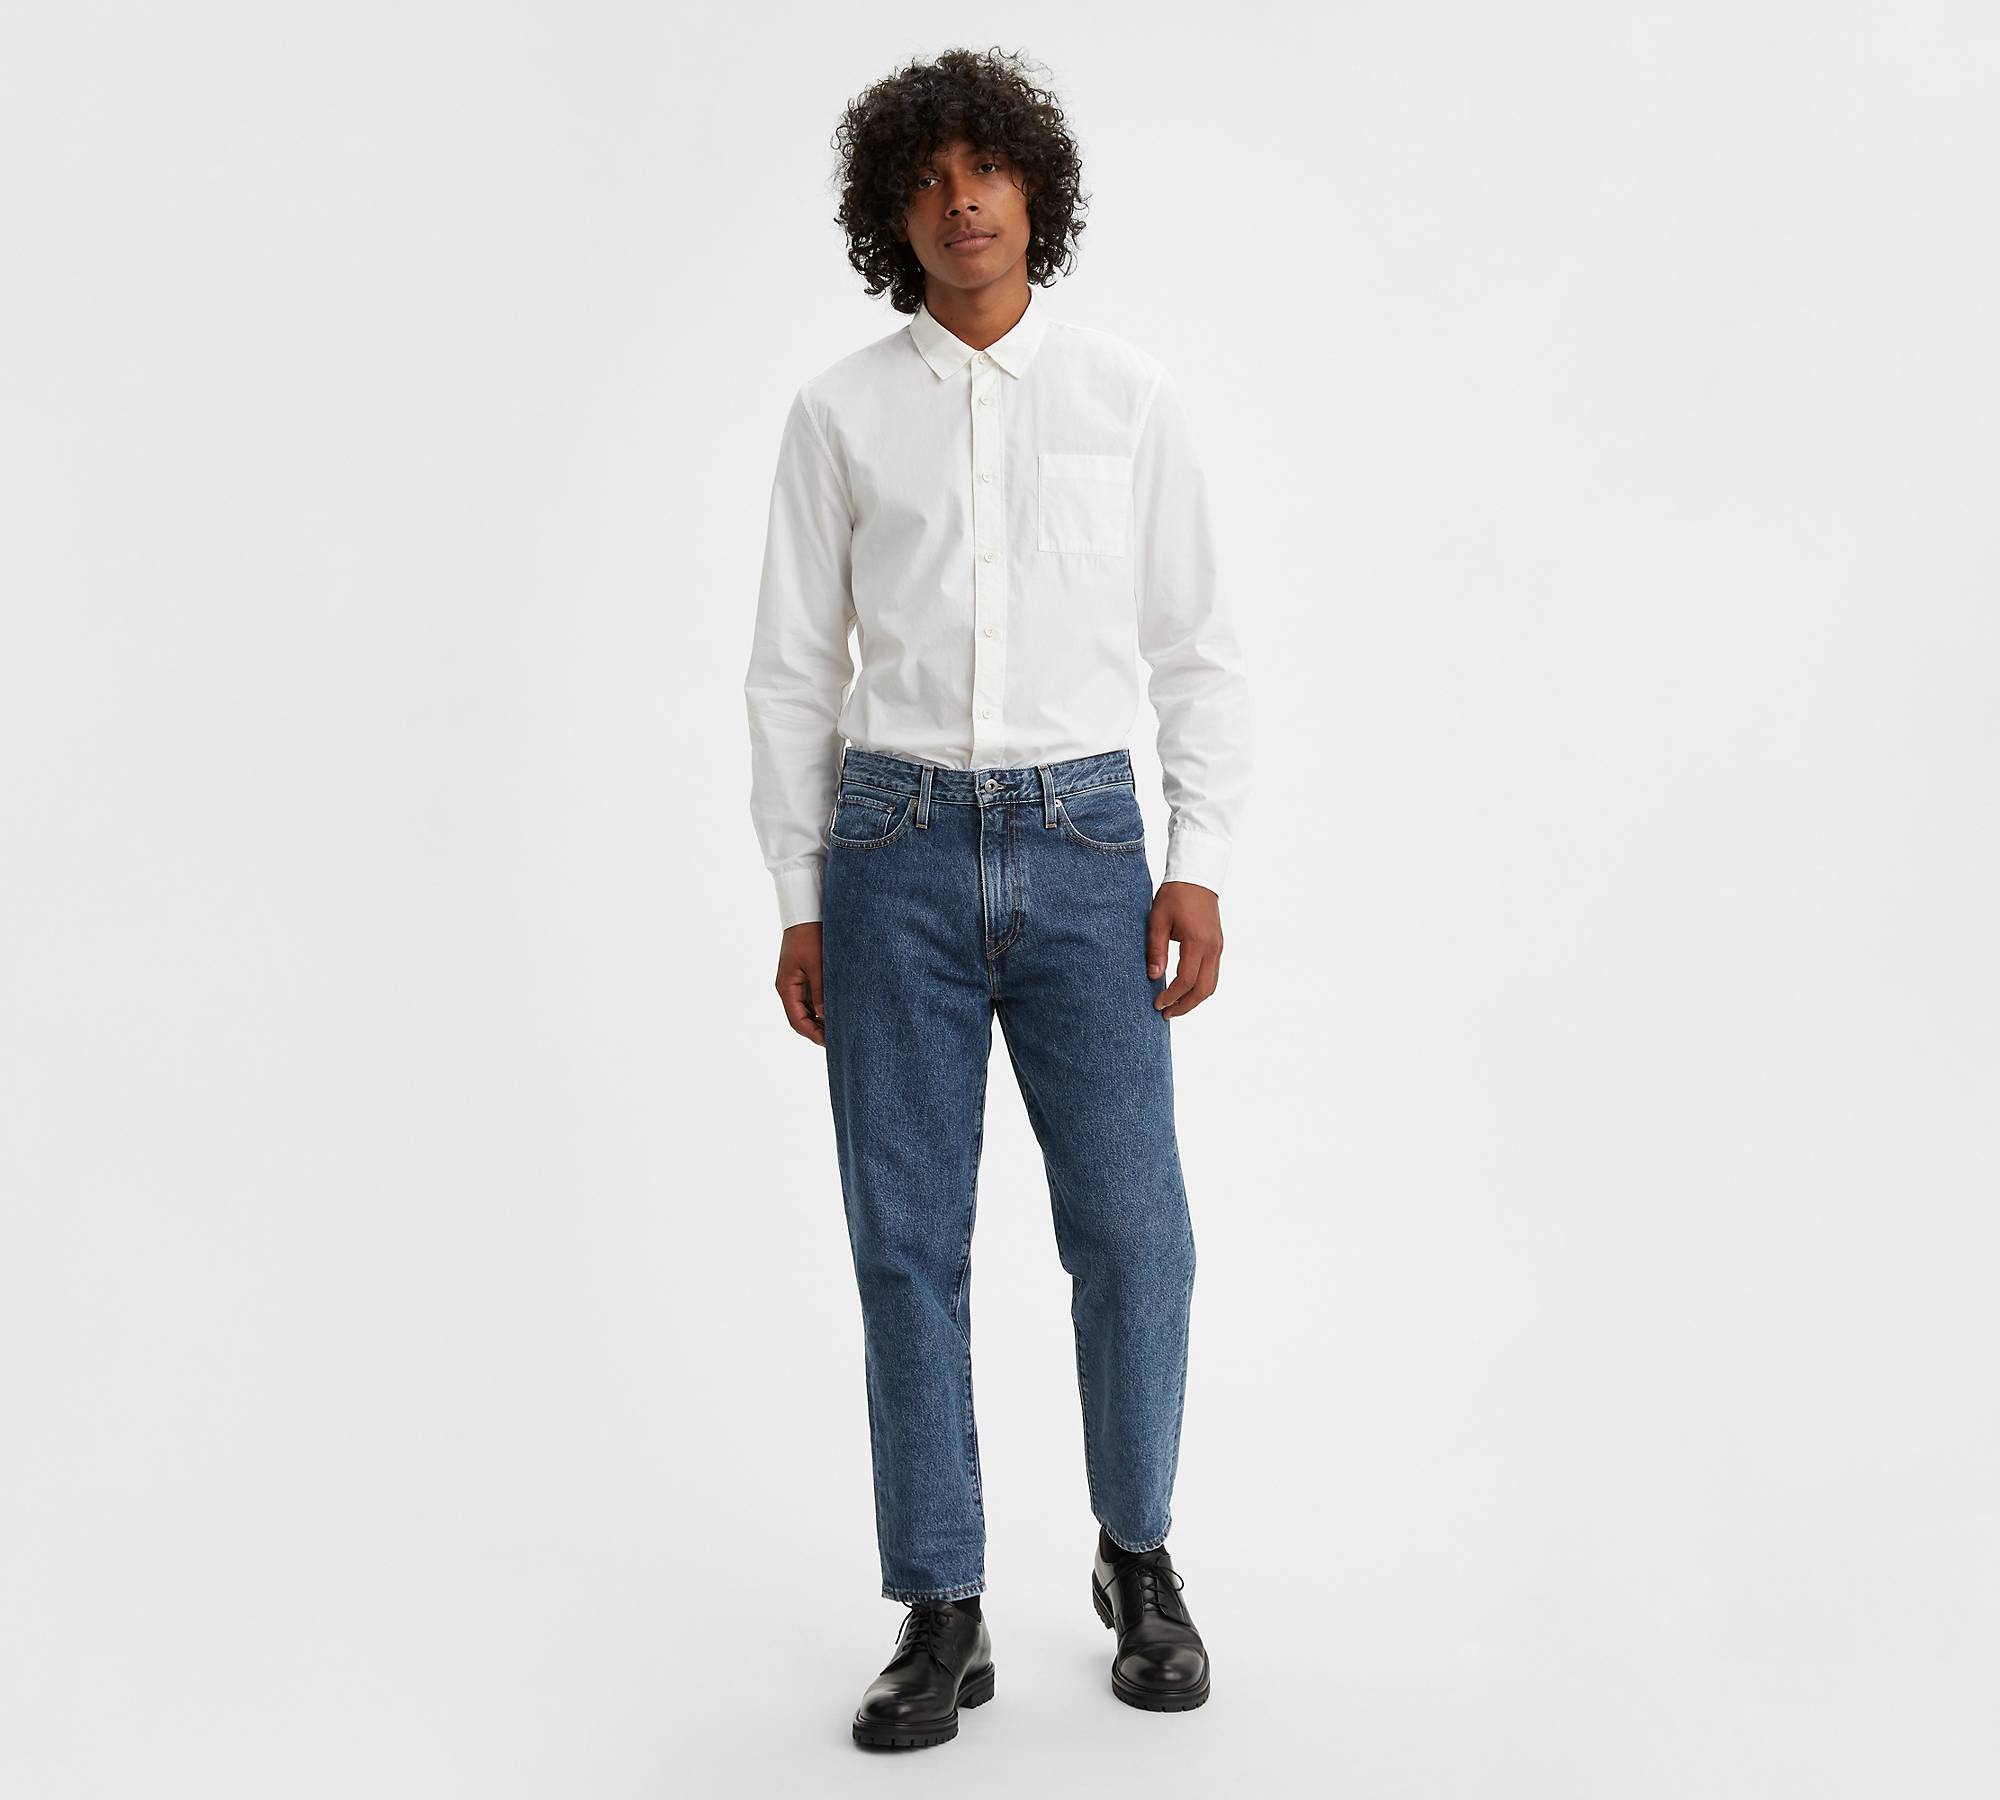 Draft Taper Men's Jeans 1